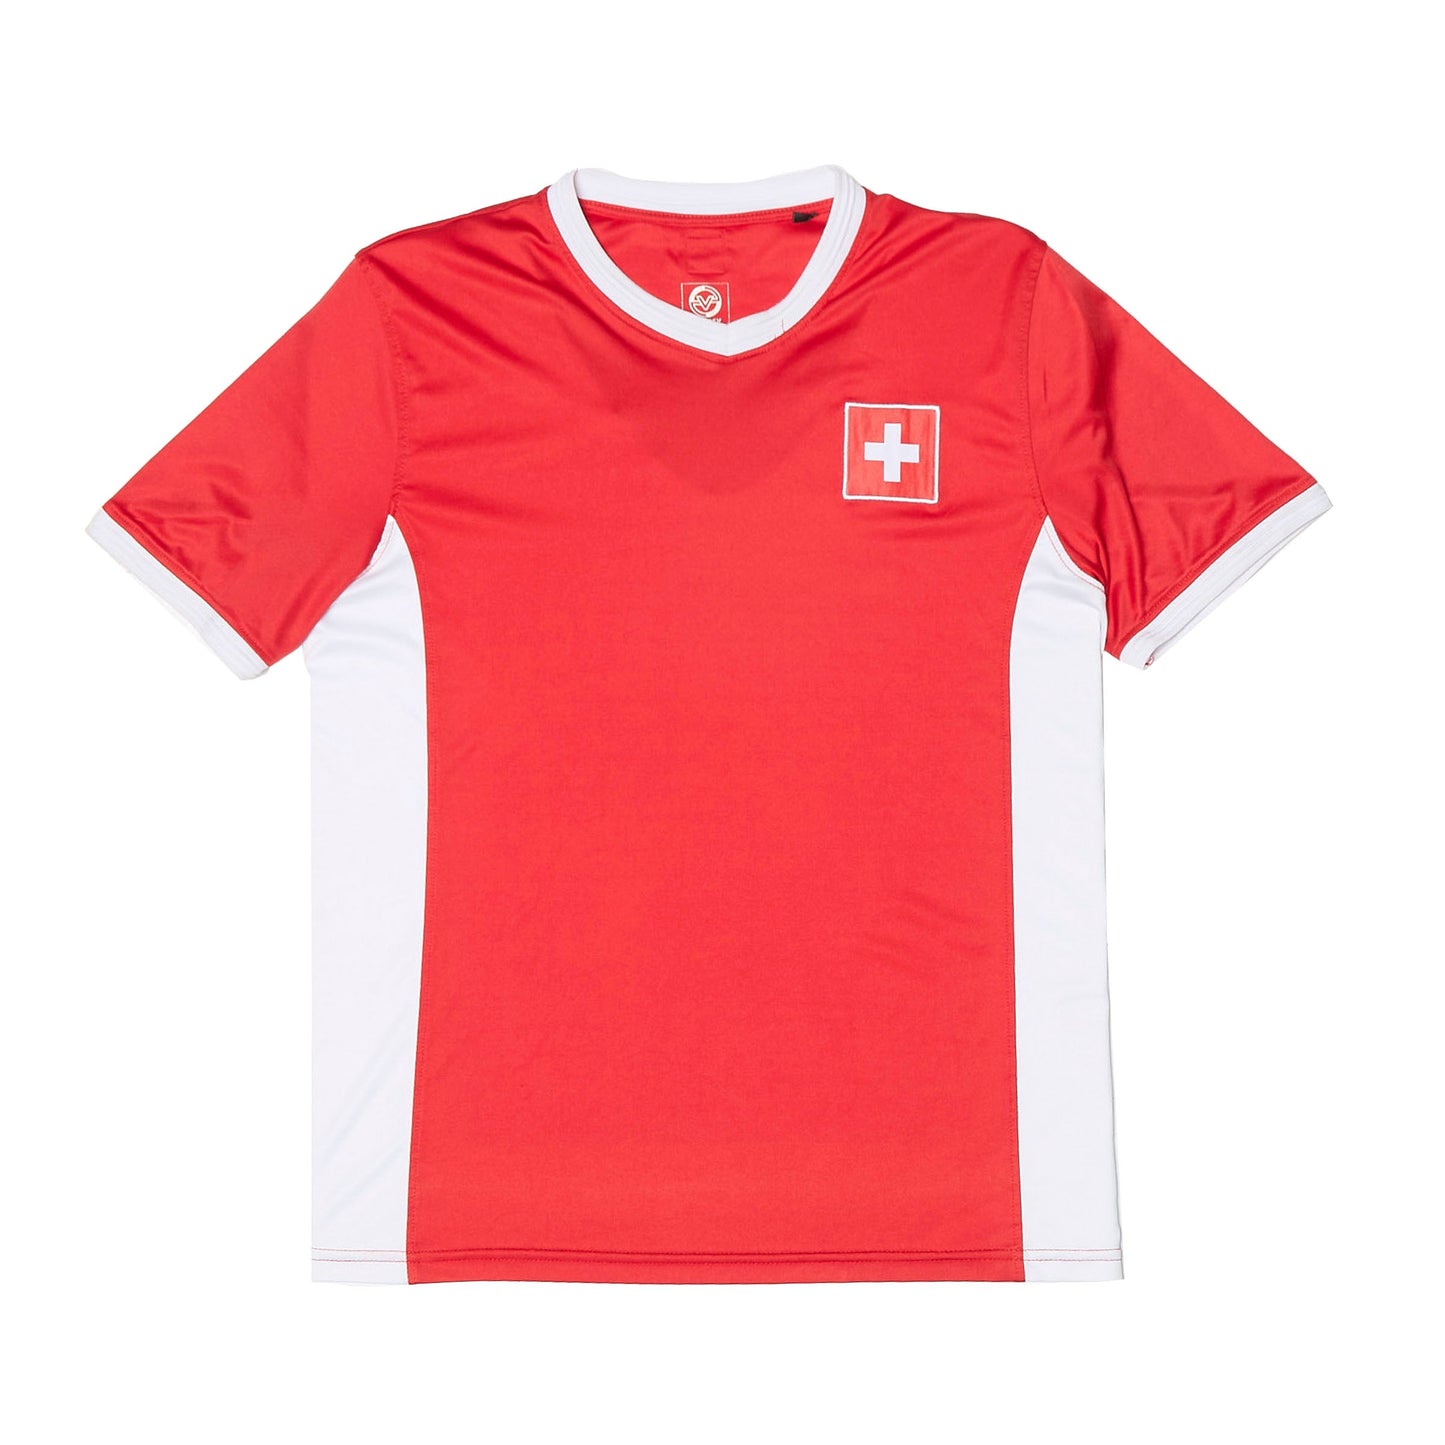 Swiss National Replica Football Shirt - L